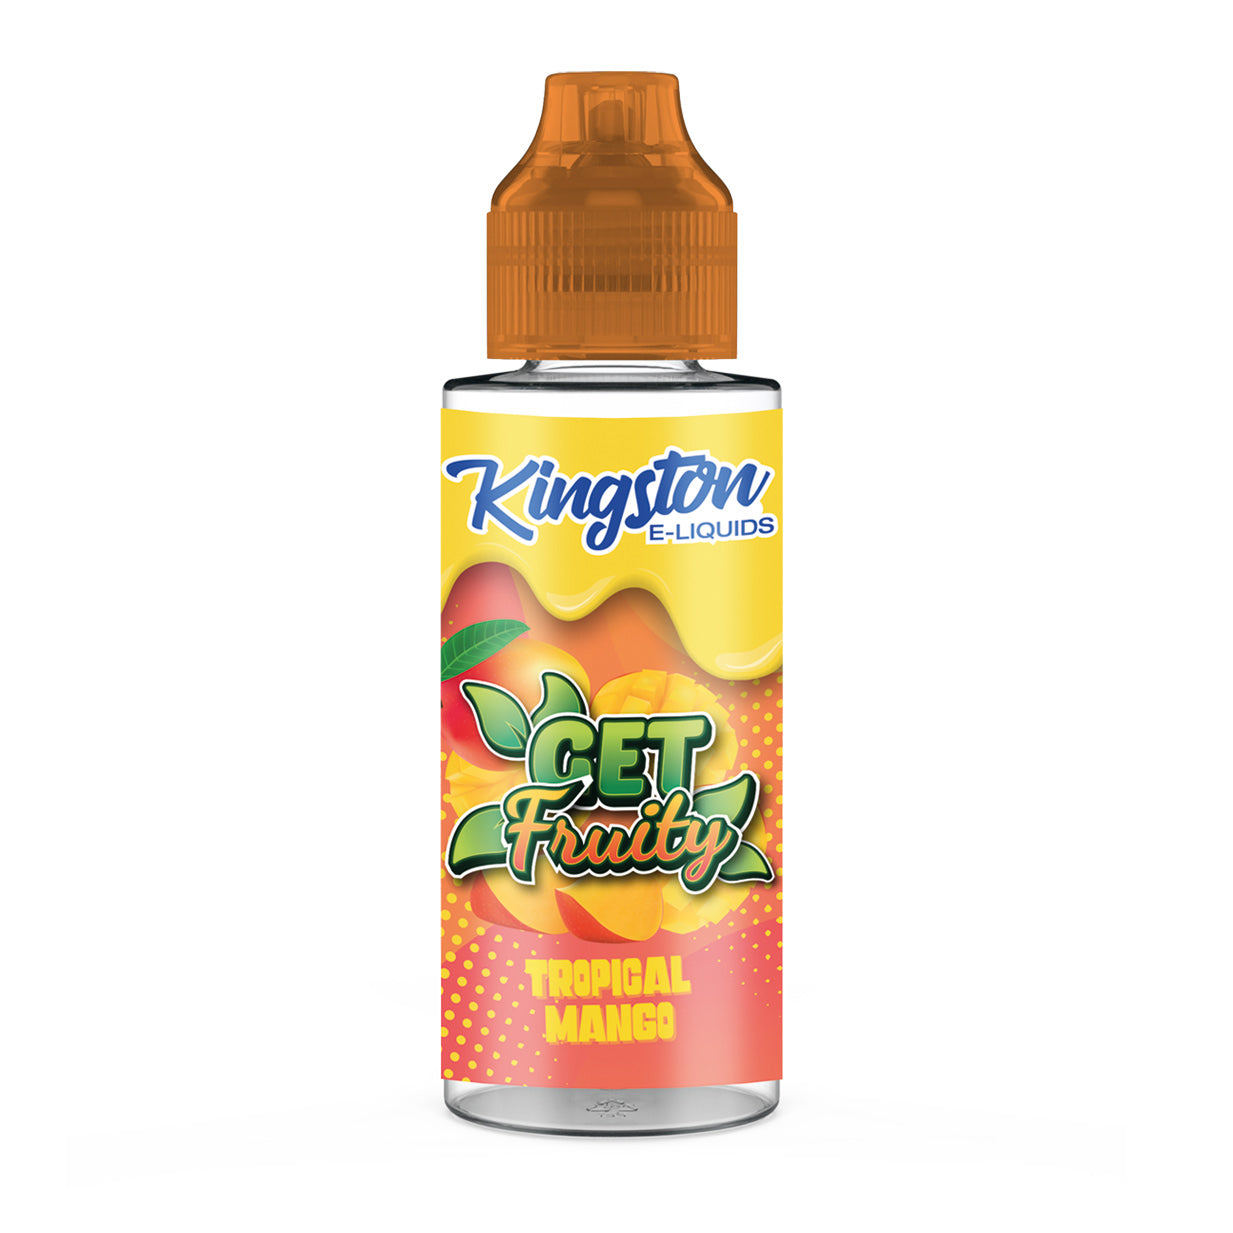 Kingston-Get-Fruity-Tropical-Mango-kingston-e-liquids-100ml-vape-juice-e-juice-eliquidsoutlet-shortifll